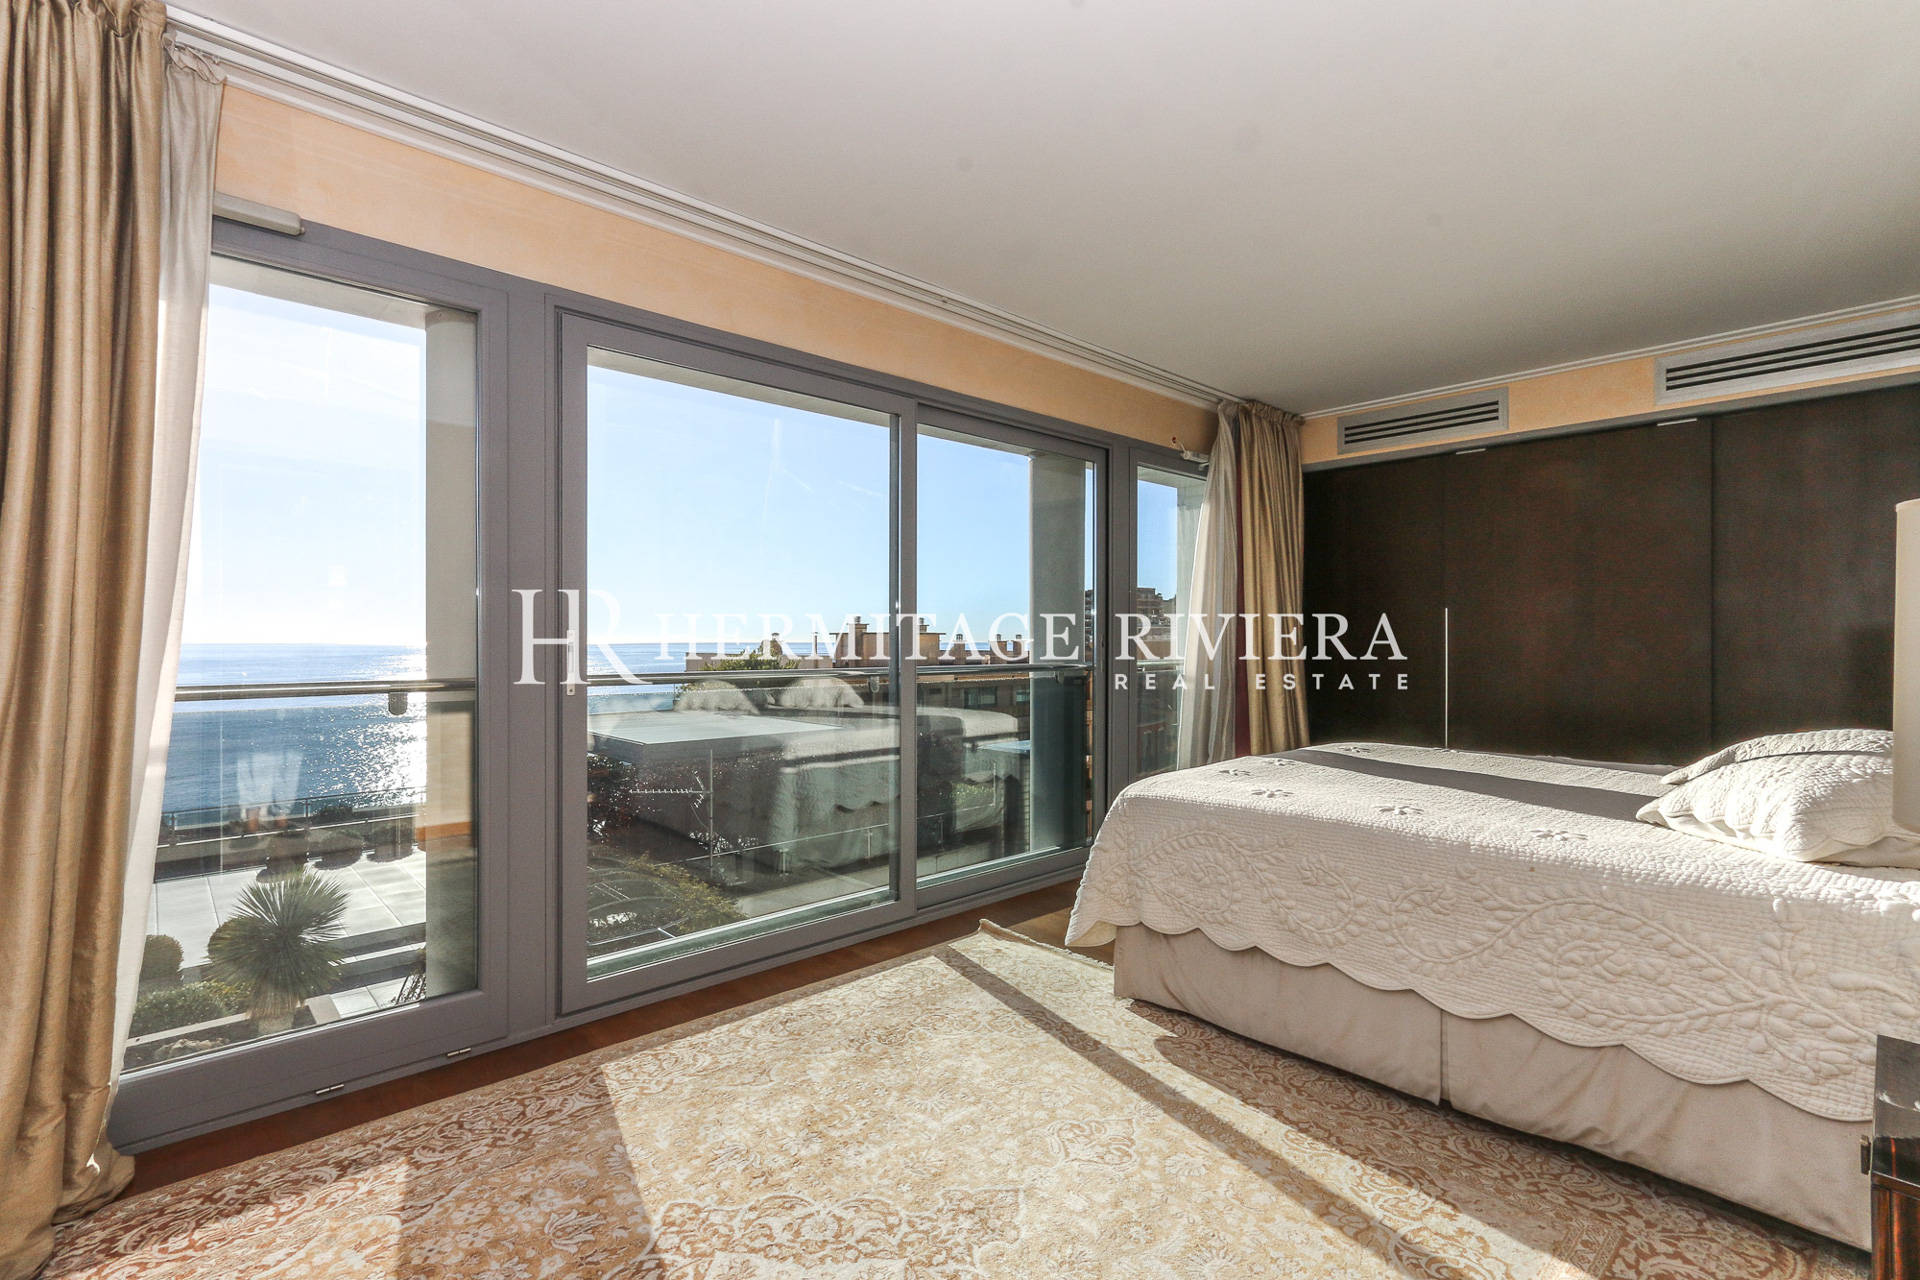 Splendid modern villa on the border with Monaco (image 18)